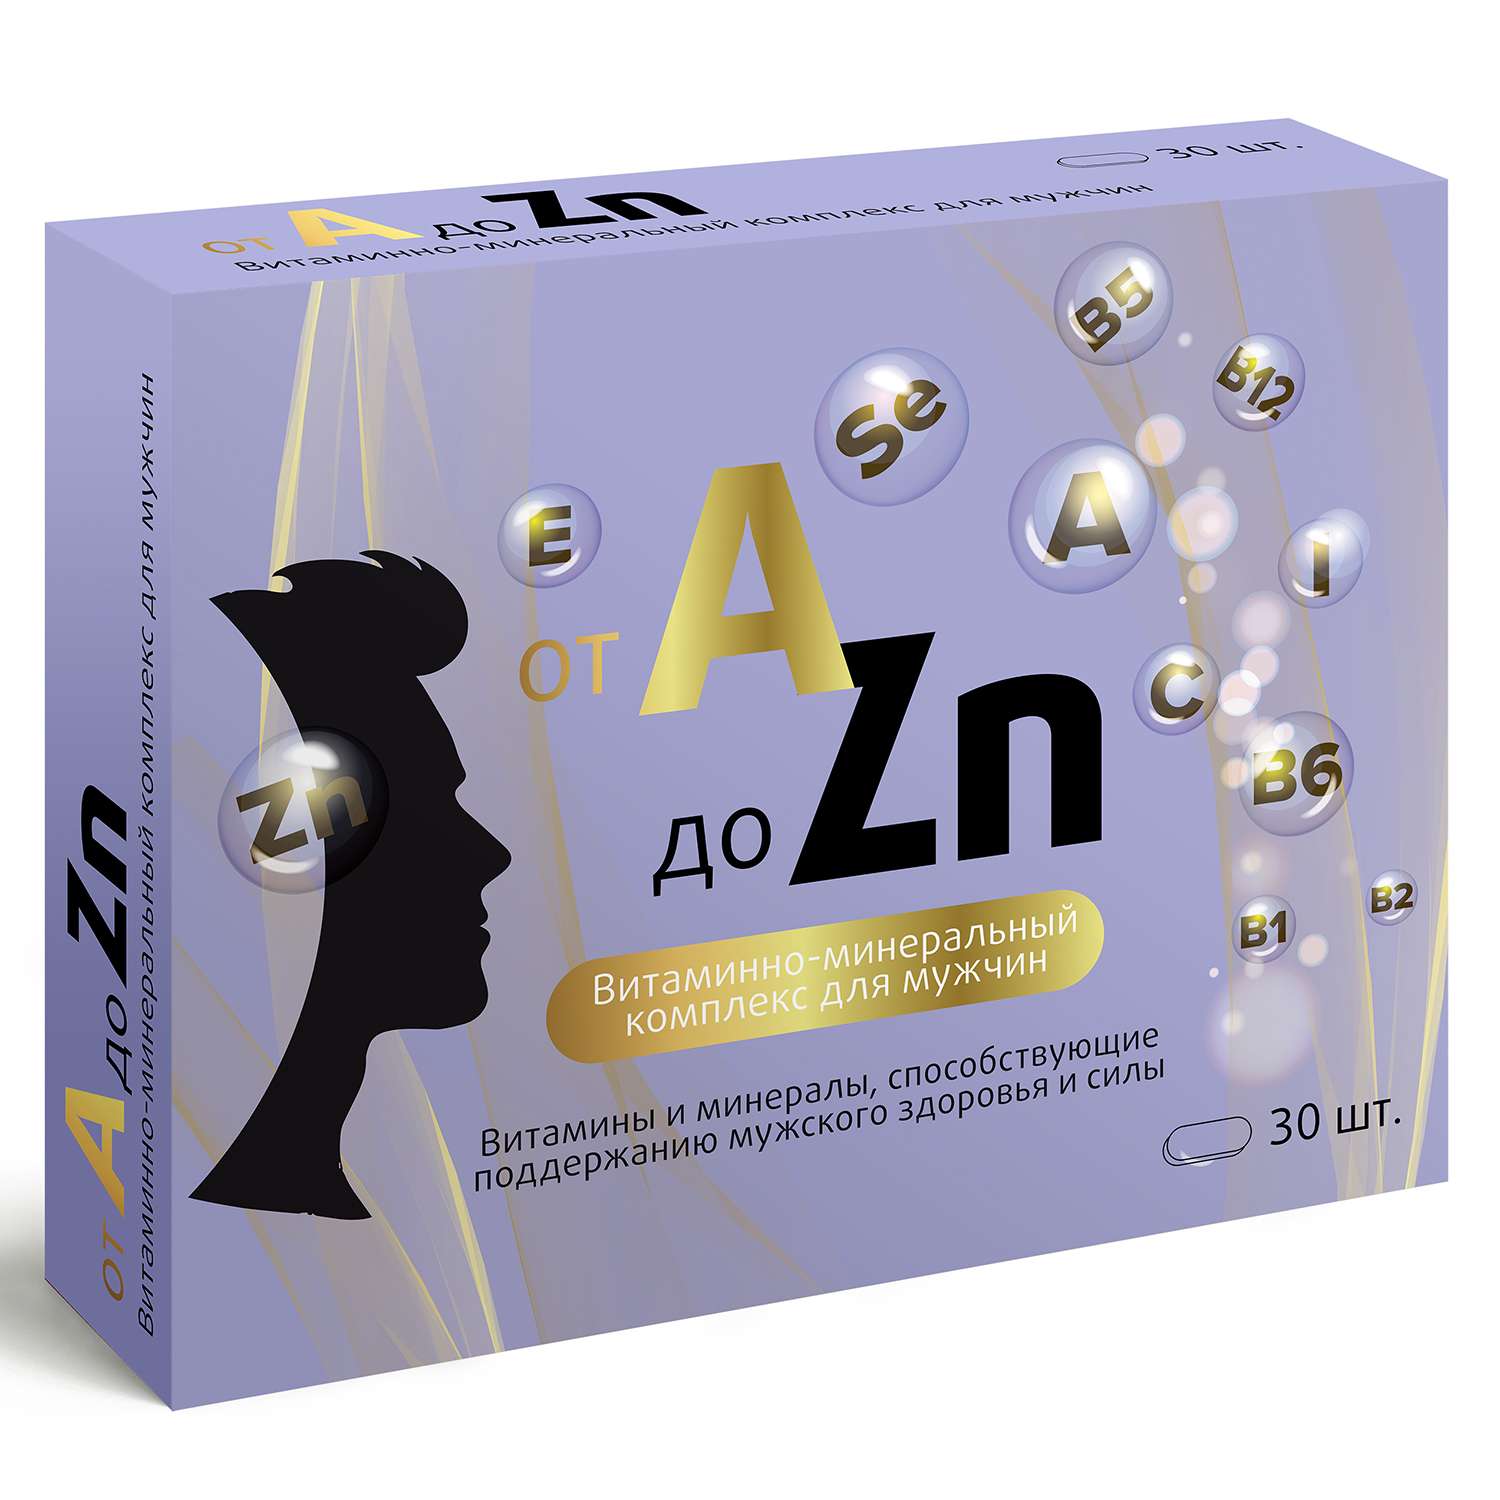 Биологически активная добавка Витамир Витаминный комплекс A-Zn для мужчин 30таблеток - фото 1